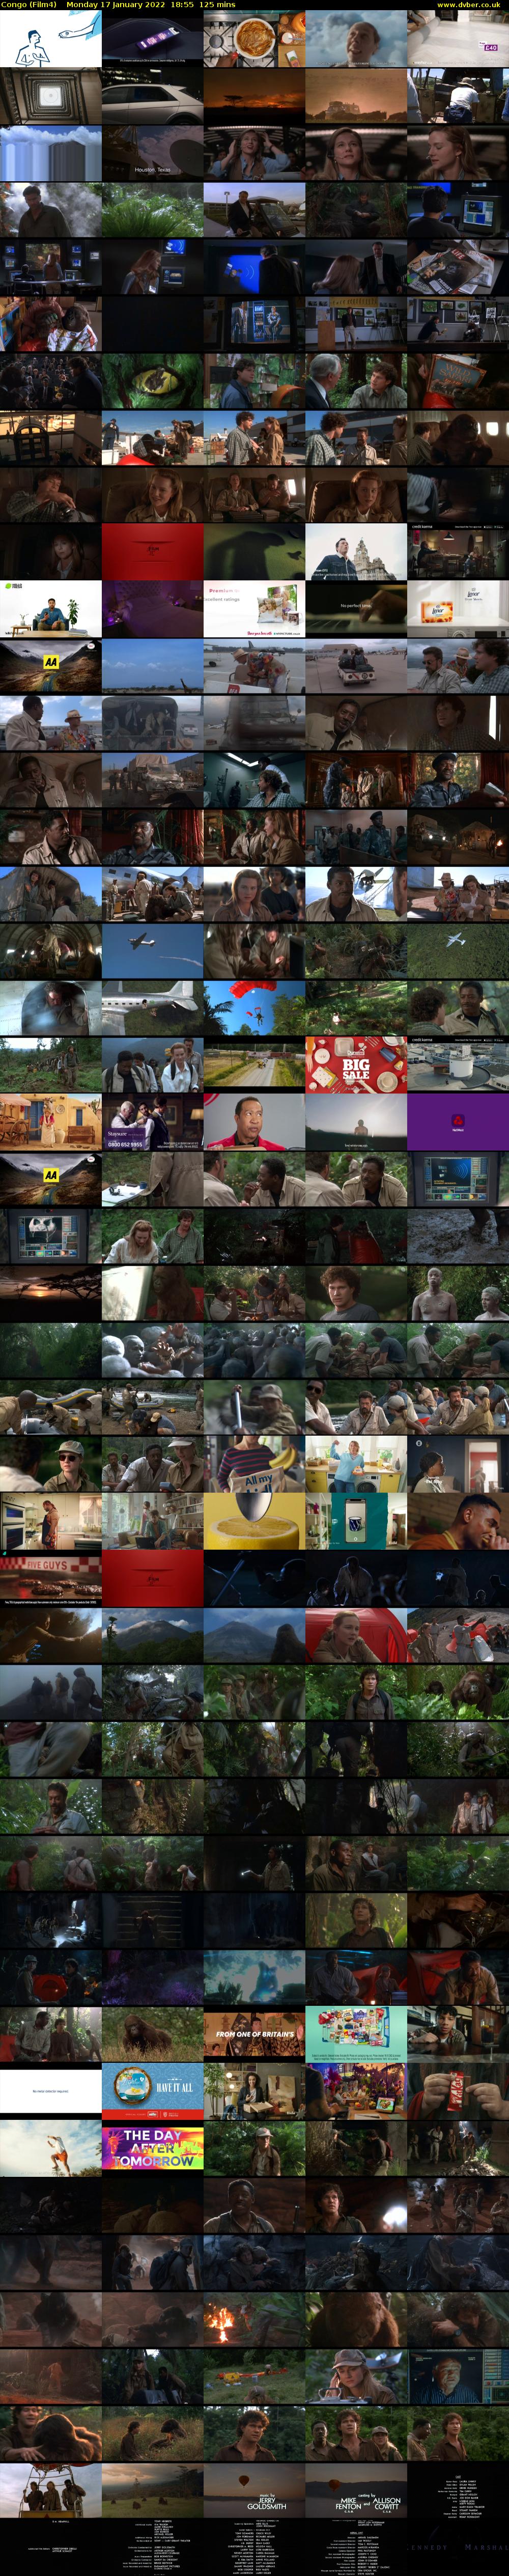 Congo (Film4) Monday 17 January 2022 18:55 - 21:00